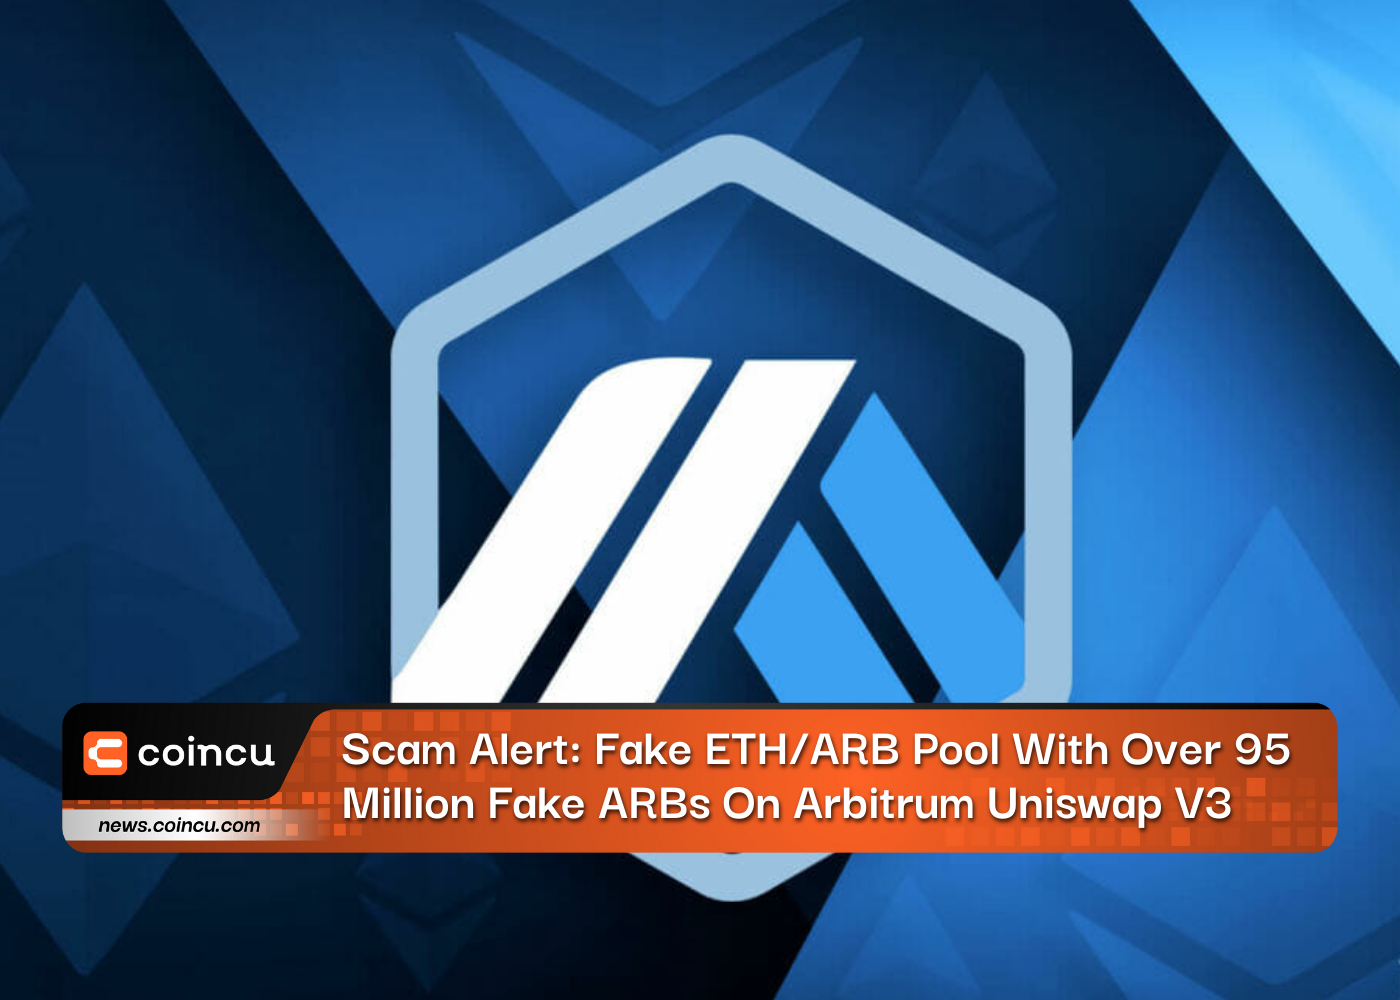 Scam Alert: Fake ETH/ARB Pool With Over 95 Million Fake ARBs On Arbitrum Uniswap V3